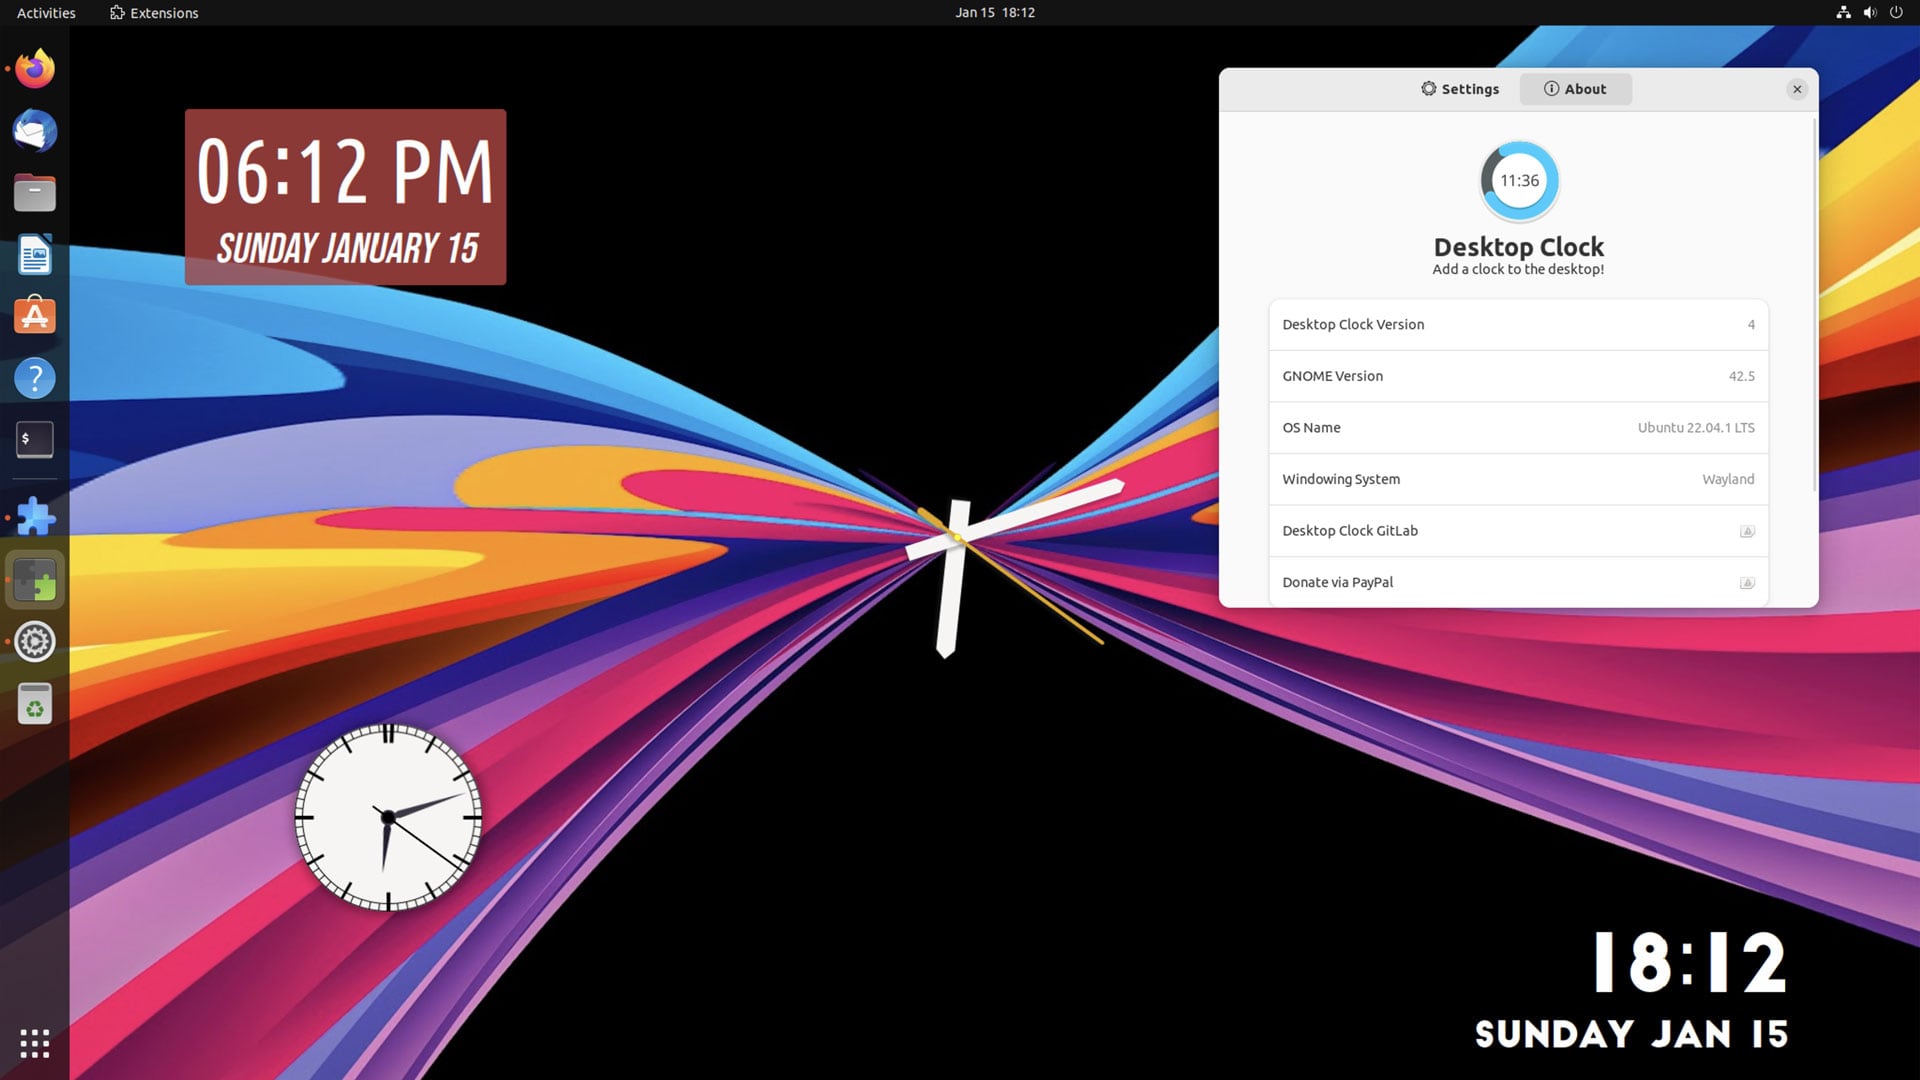 desktop clocks extension showing 4 clocks on the ubuntu desktop